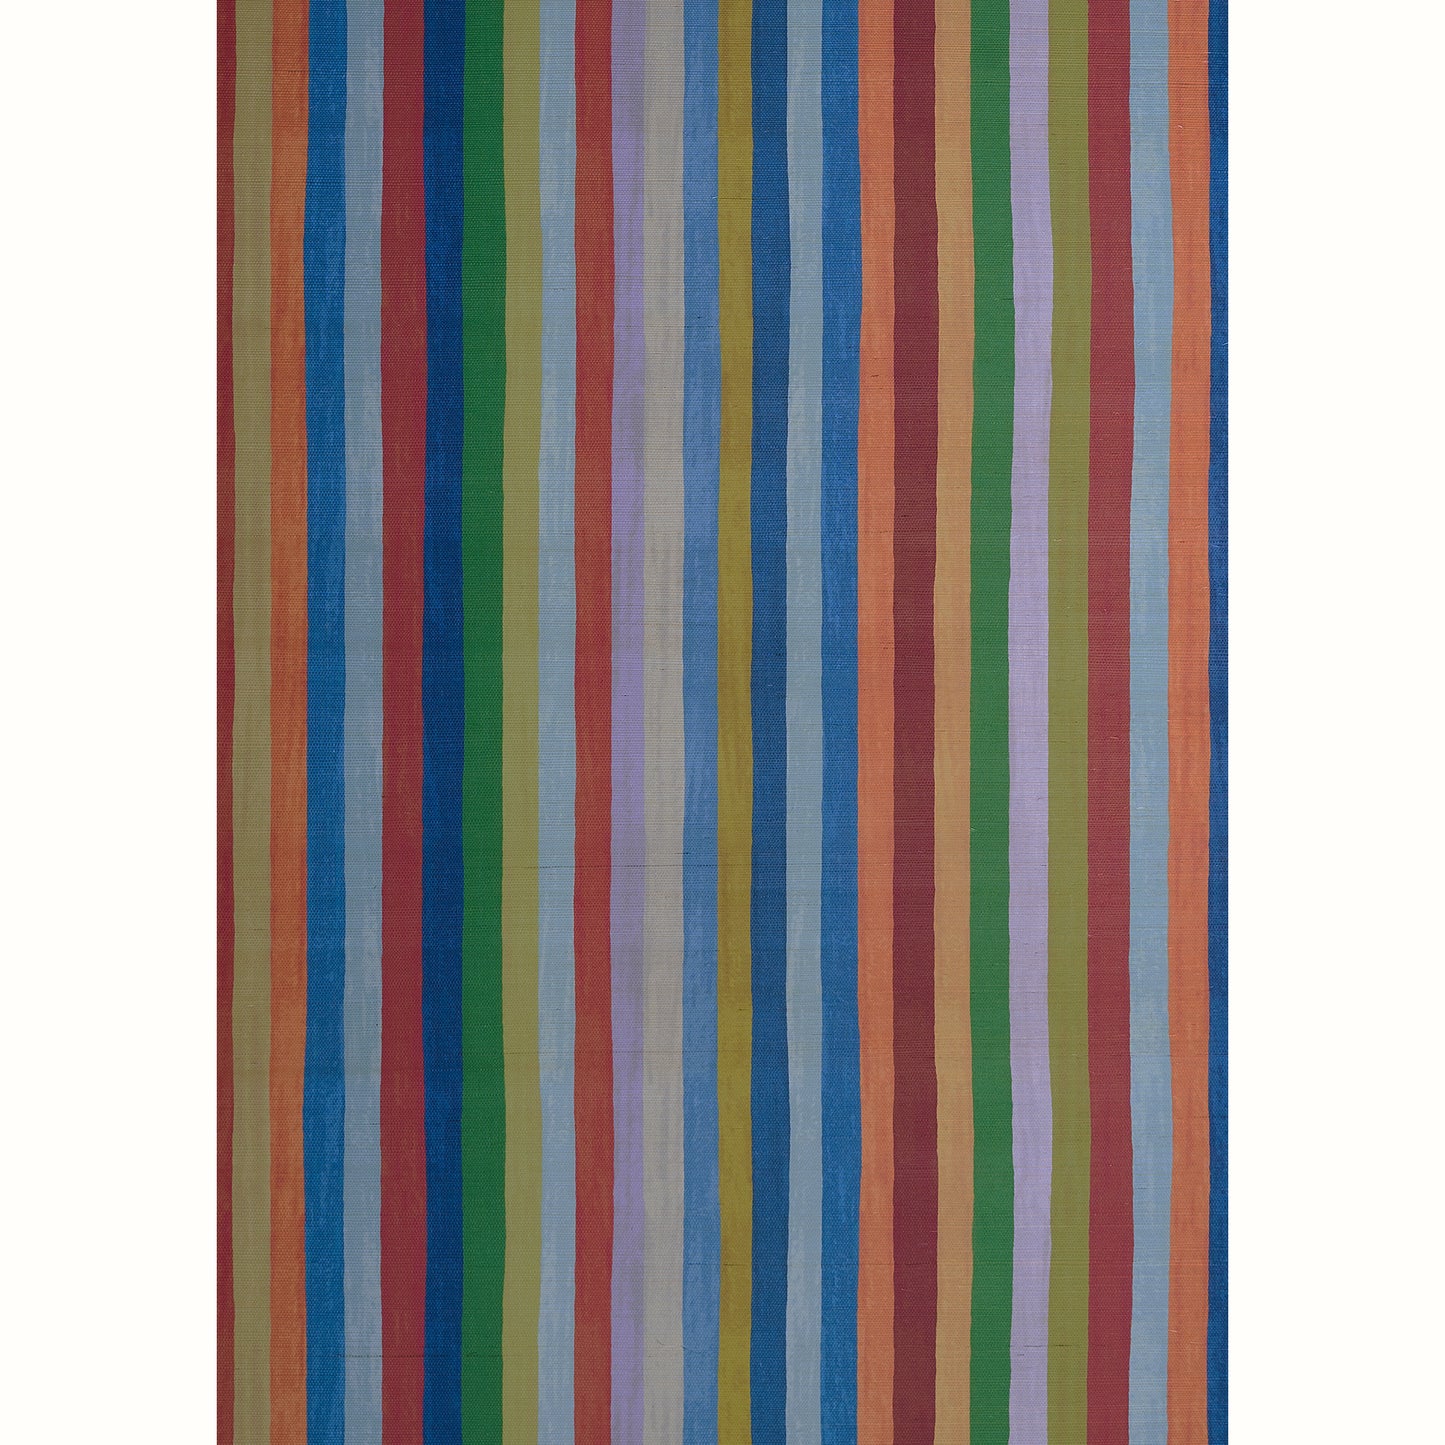 Jacob's Stripe - Multi